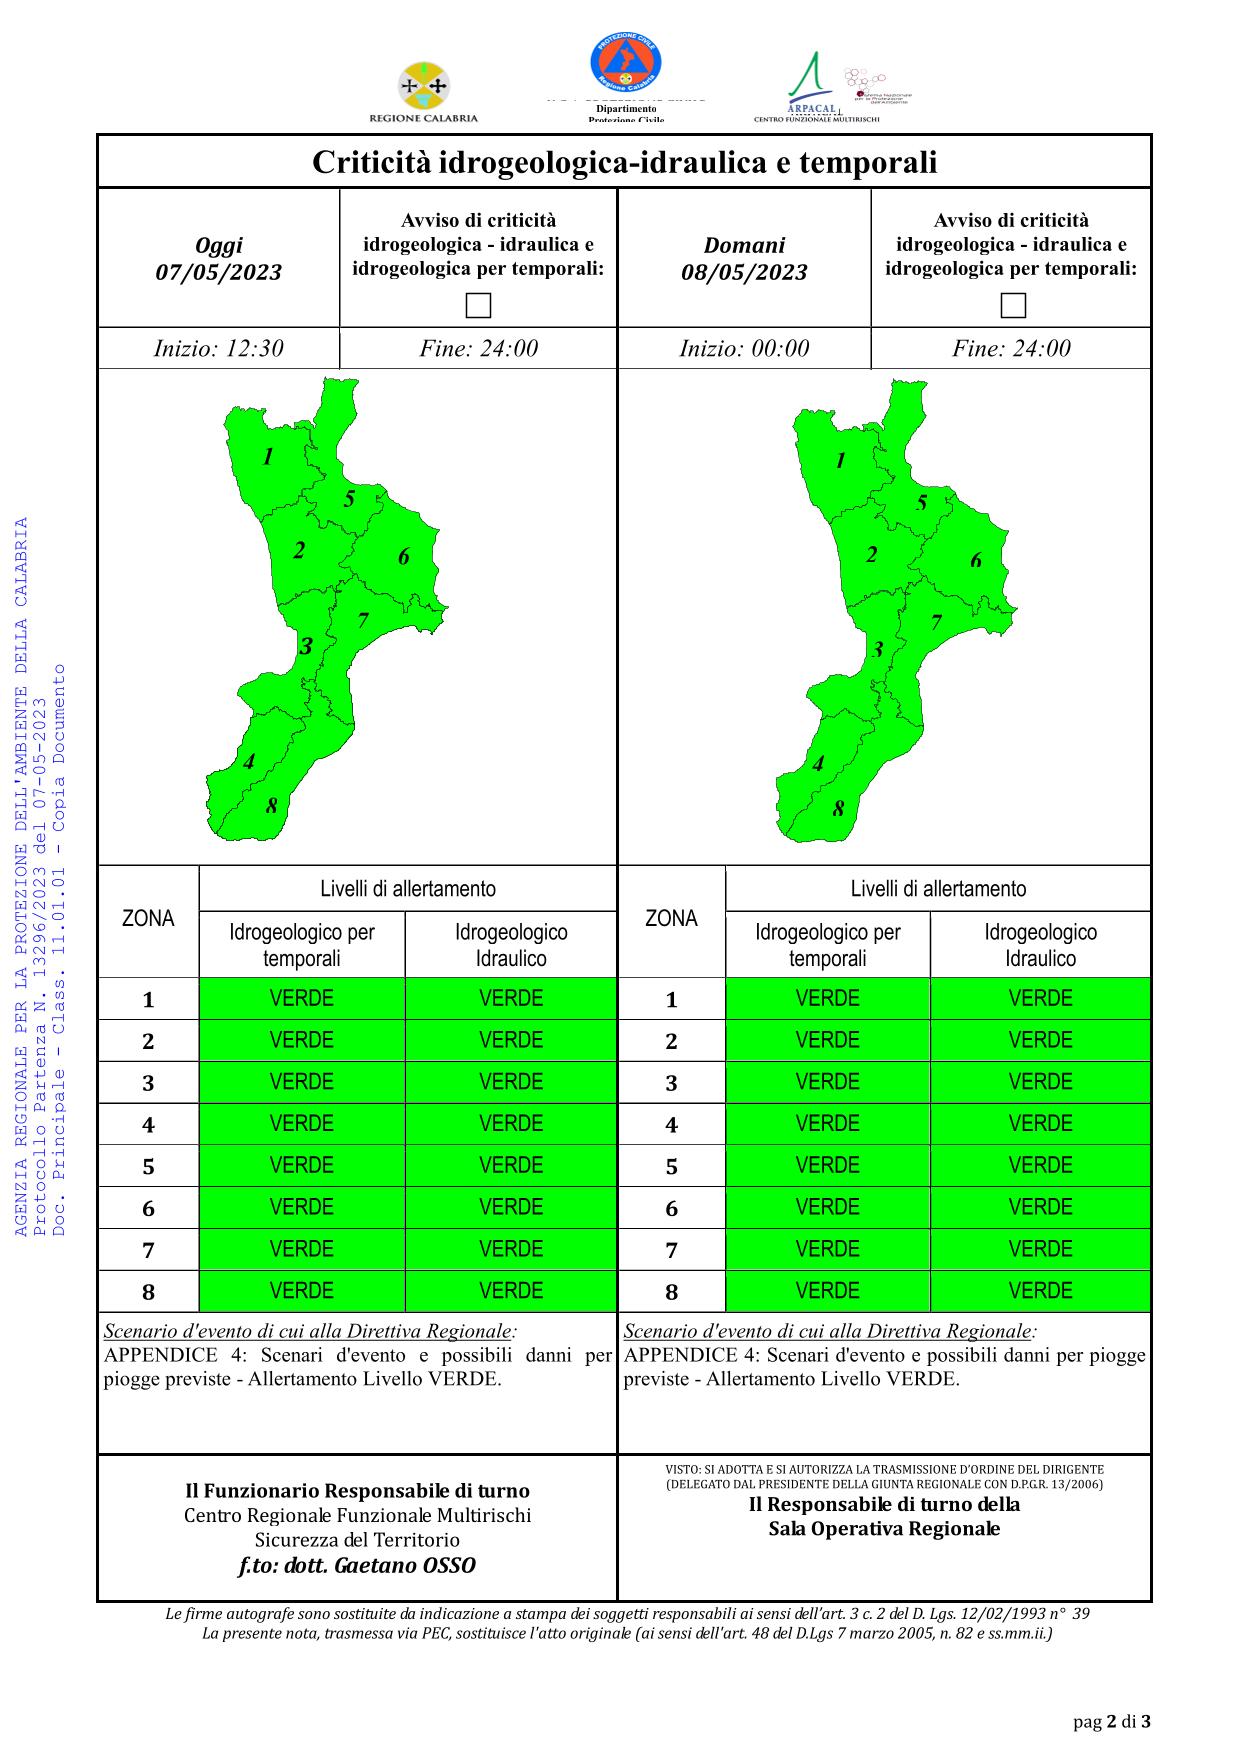 Criticità idrogeologica-idraulica e temporali in Calabria 07-05-2023